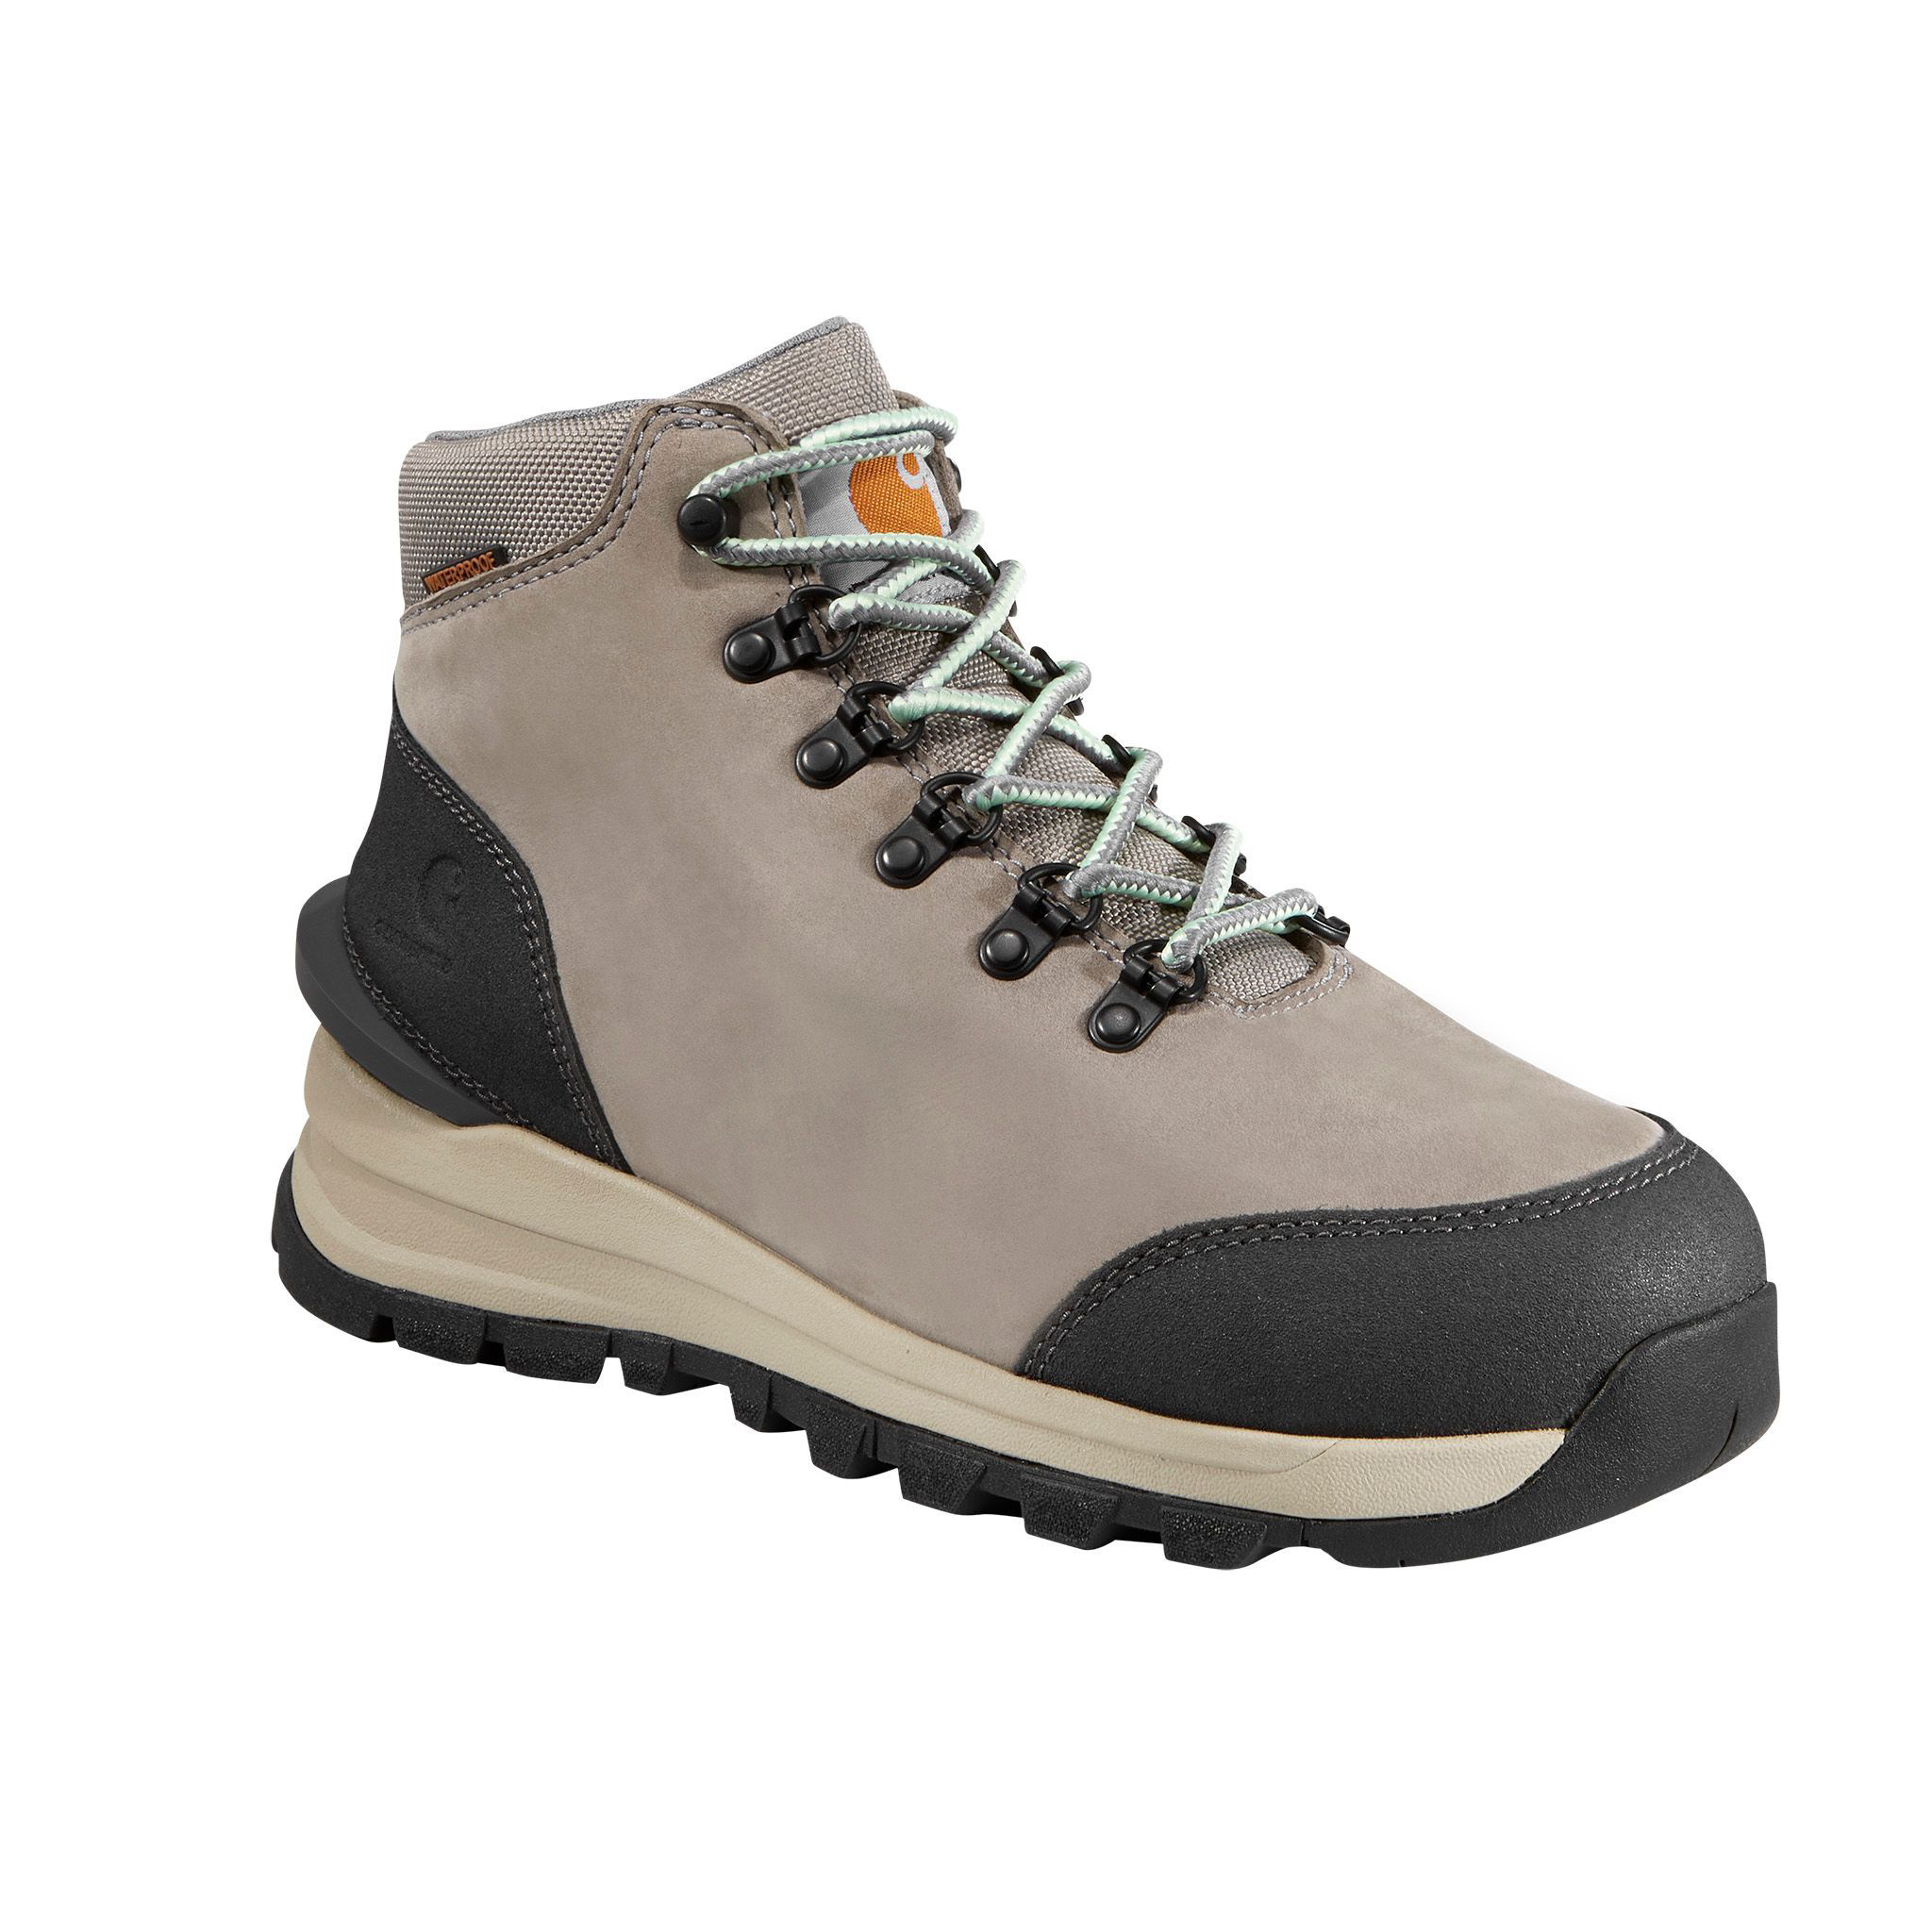 Carhartt Gilmore Waterproof Hiking Boots for Ladies - Grey Nubuck - 6M